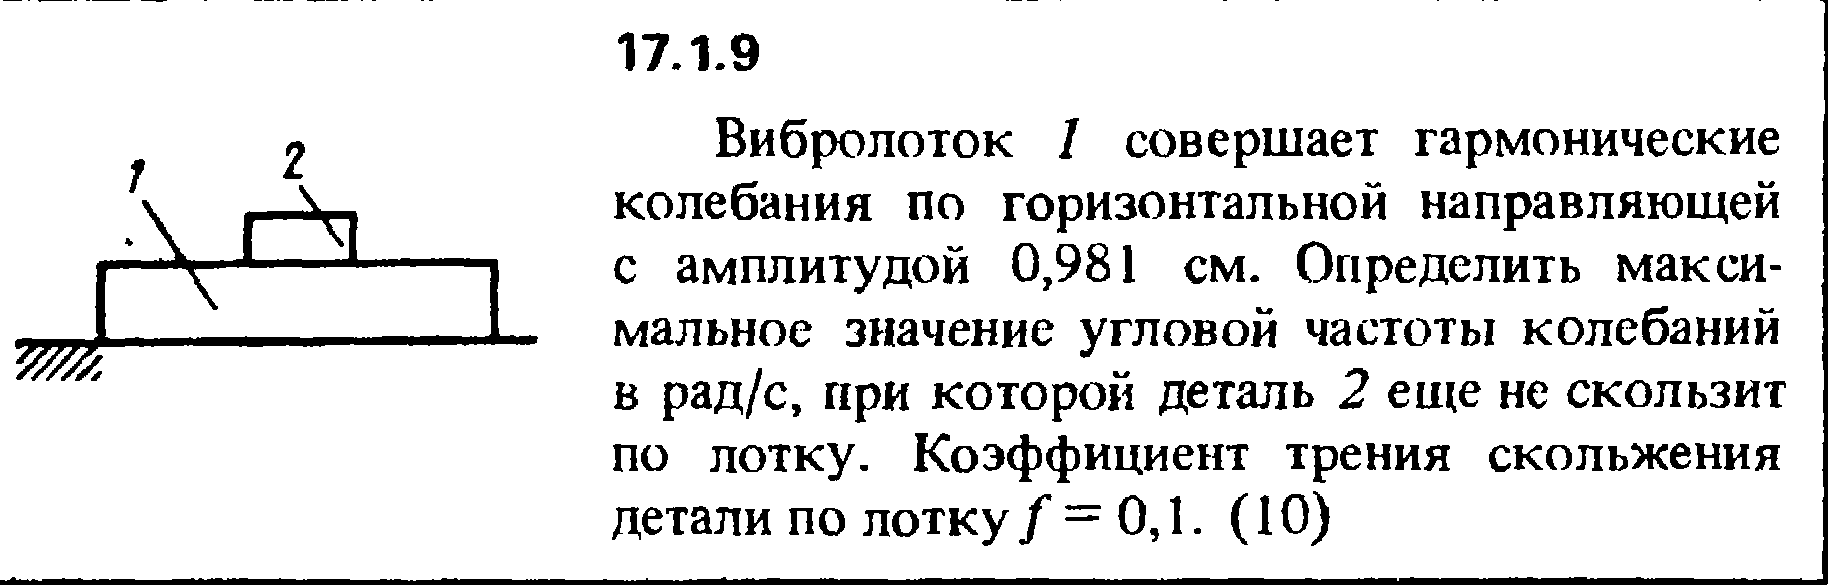 Решение задачи 17.1.9 из сборника Кепе О.Е. 1989 года